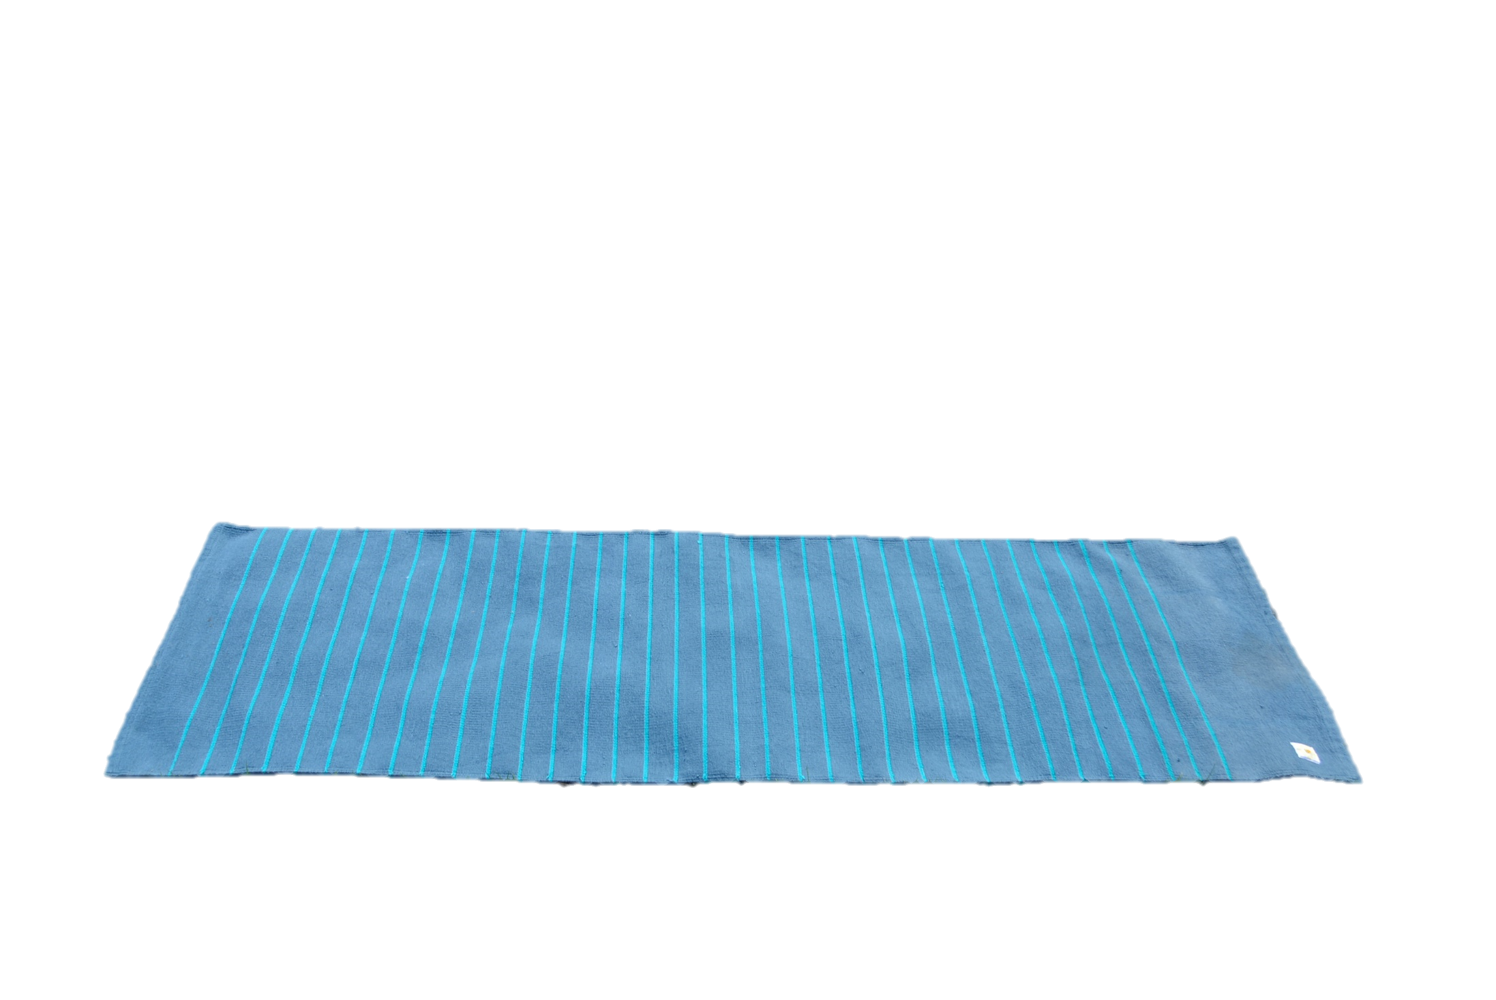 Premium Absorption Hot Yoga Mat Towel with Slip-Resistant Grip Dots